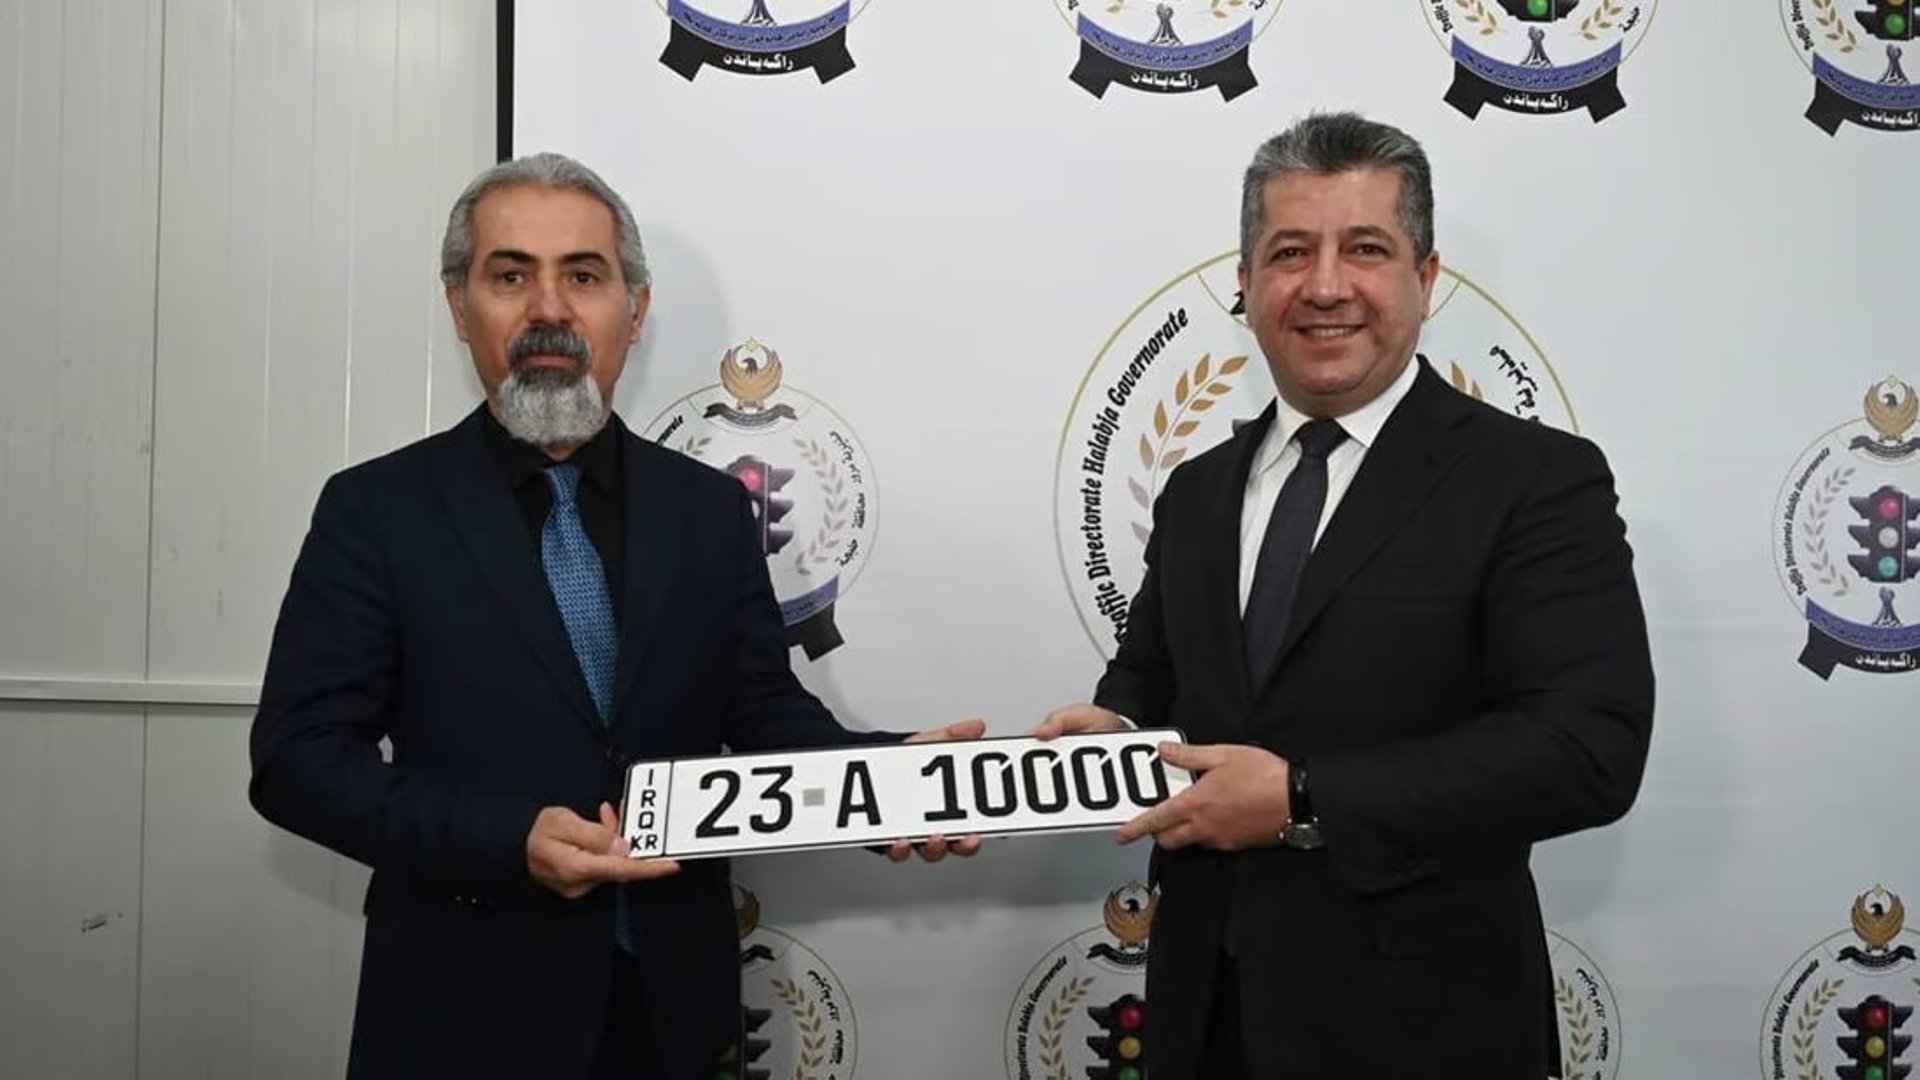 Halabja survivor receives first car license plate by KRG PM Barzani